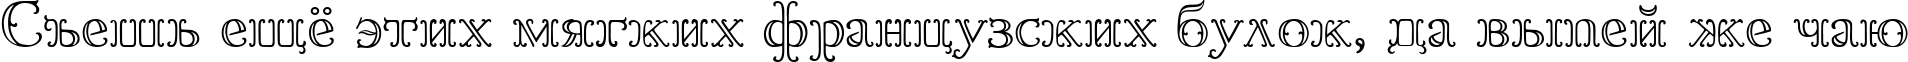 Пример написания шрифтом Goudy OrnateC текста на русском